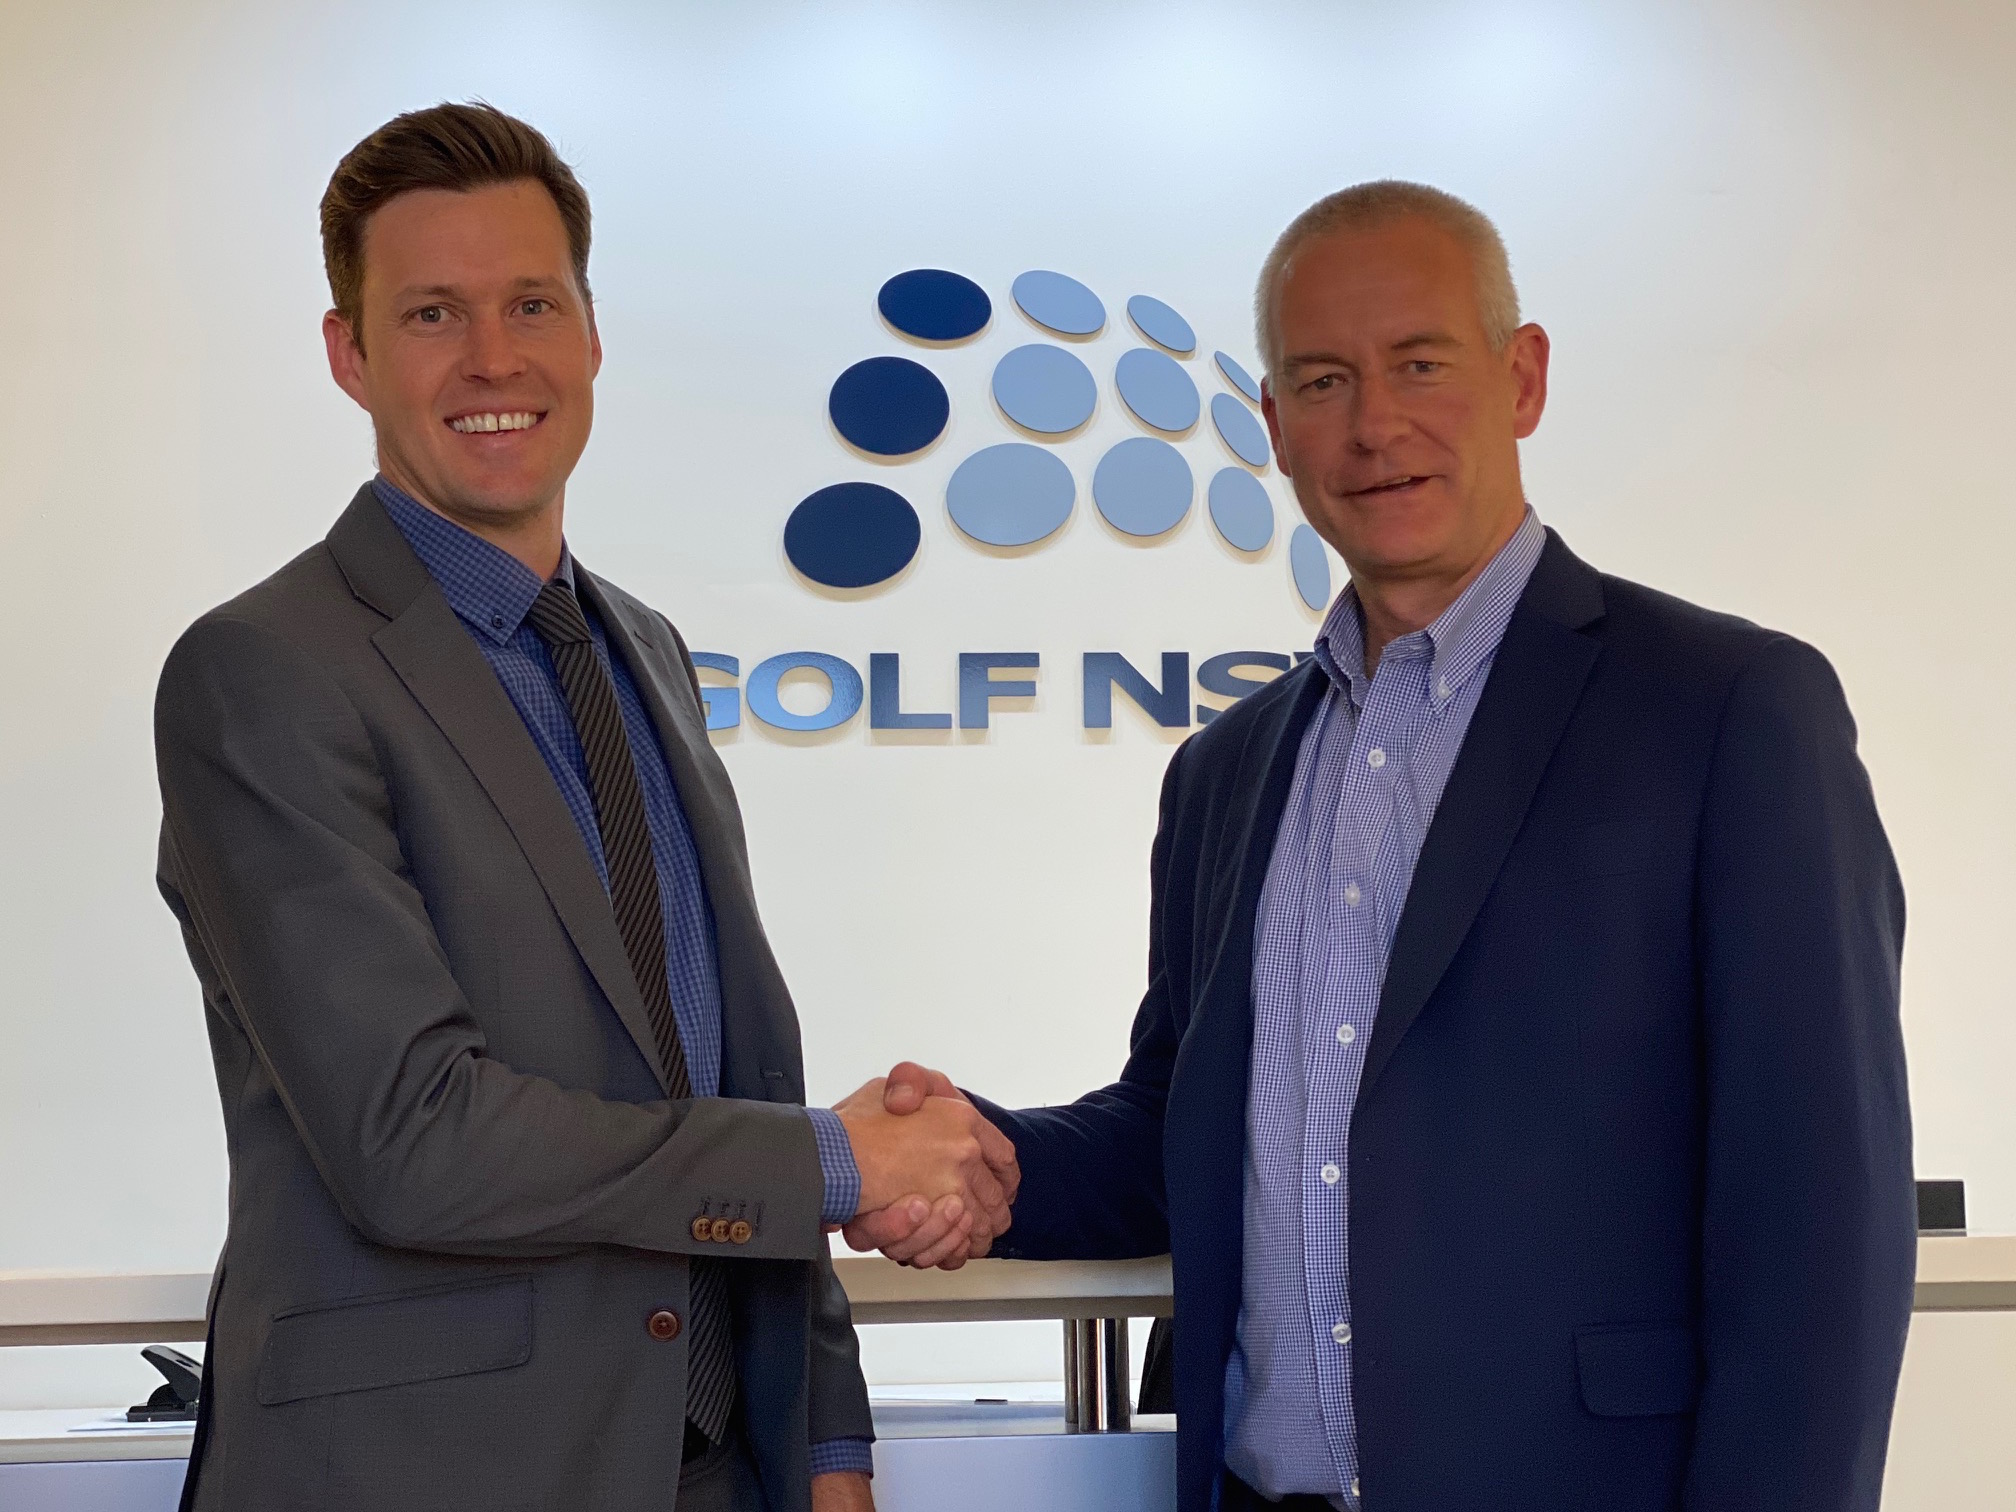 Golf Business Australia Become Golf NSW Partner